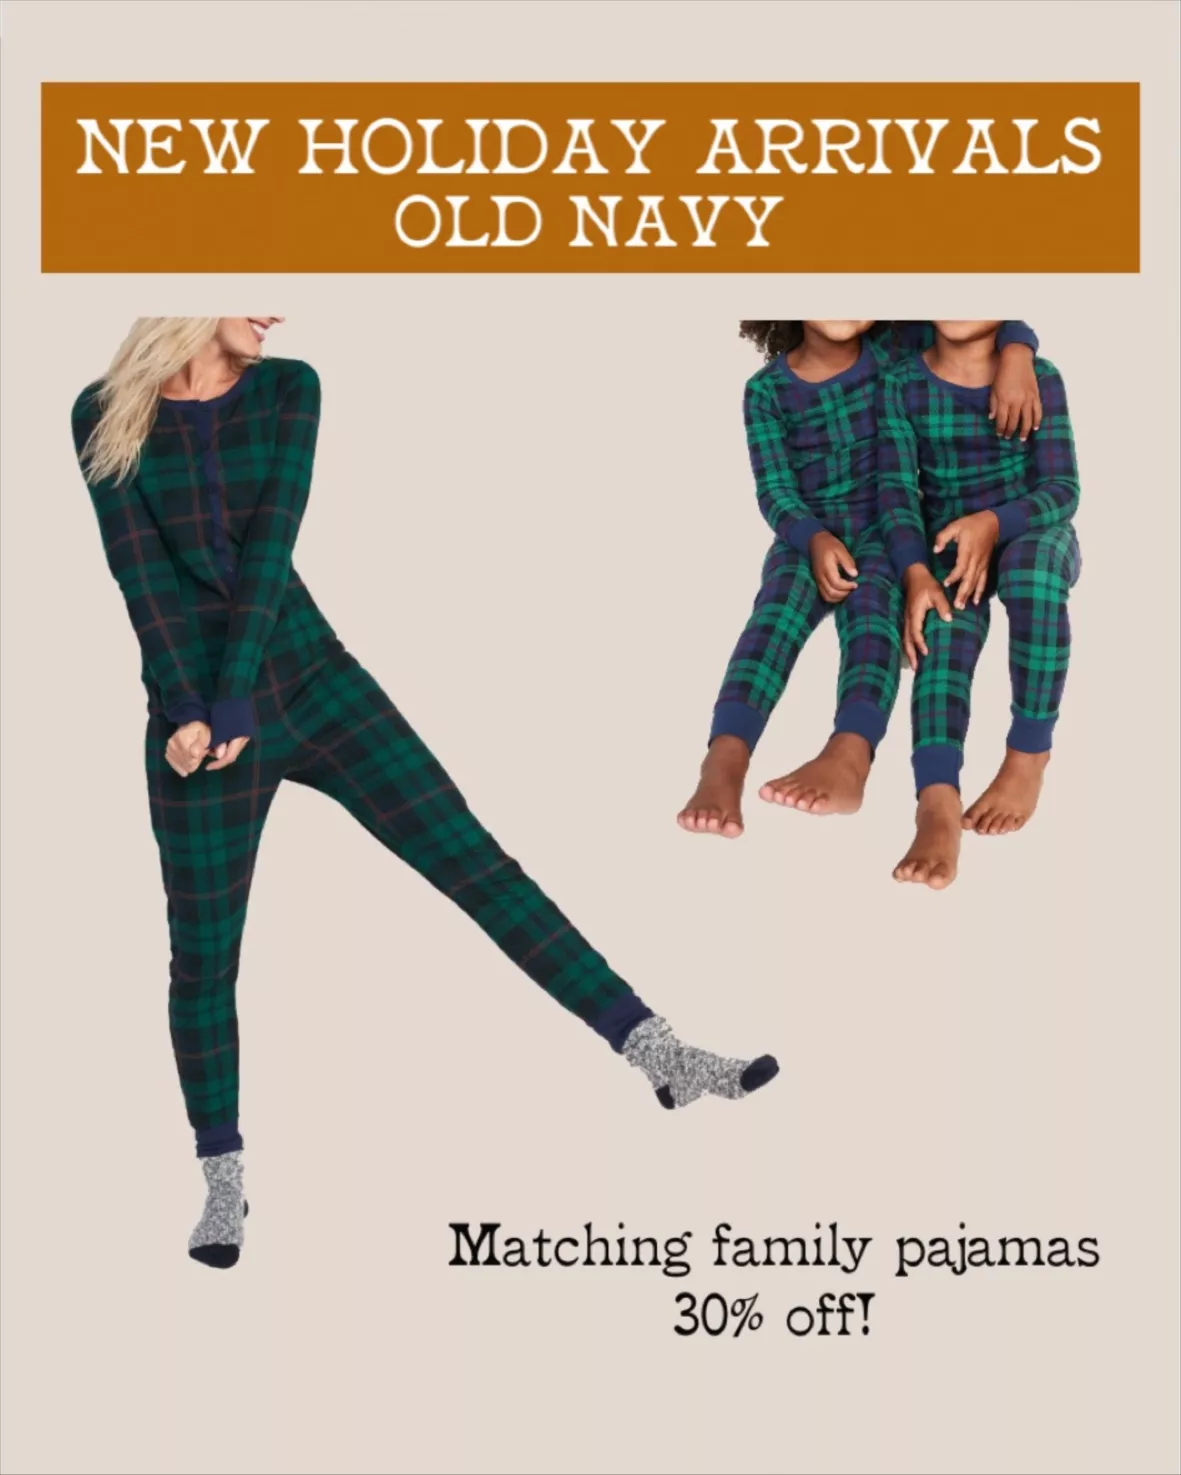 Matching Printed Thermal-Knit One-Piece Pajamas